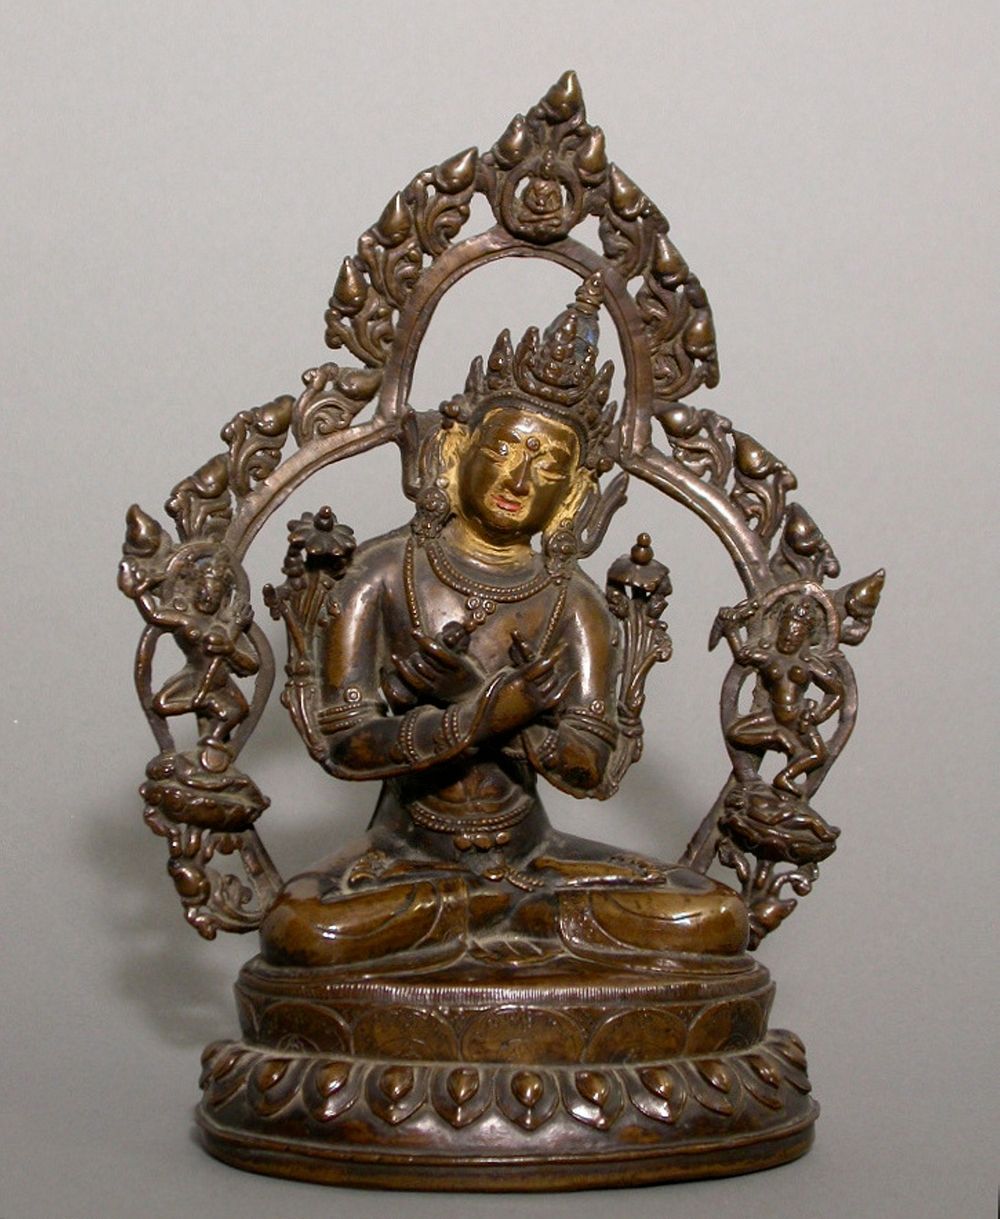 Vajradhara Seated Holding a Thunderbolt (Vajra) and Bell (Ghanta)